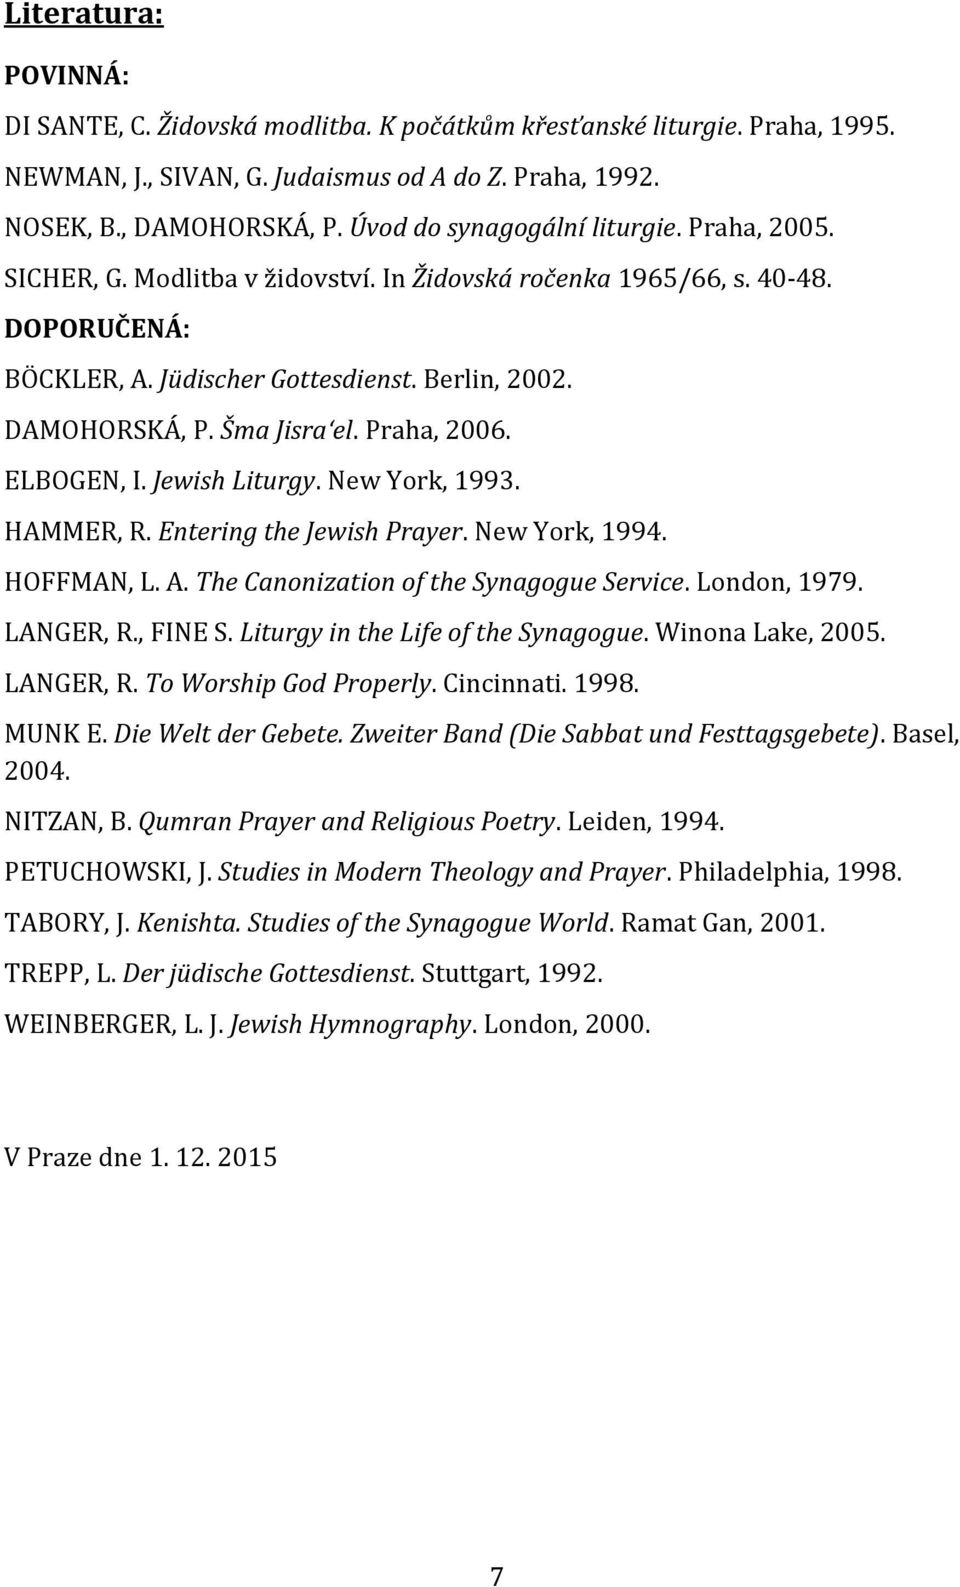 Šma Jisra el. Praha, 2006. ELBOGEN, I. Jewish Liturgy. New York, 1993. HAMMER, R. Entering the Jewish Prayer. New York, 1994. HOFFMAN, L. A. The Canonization of the Synagogue Service. London, 1979.